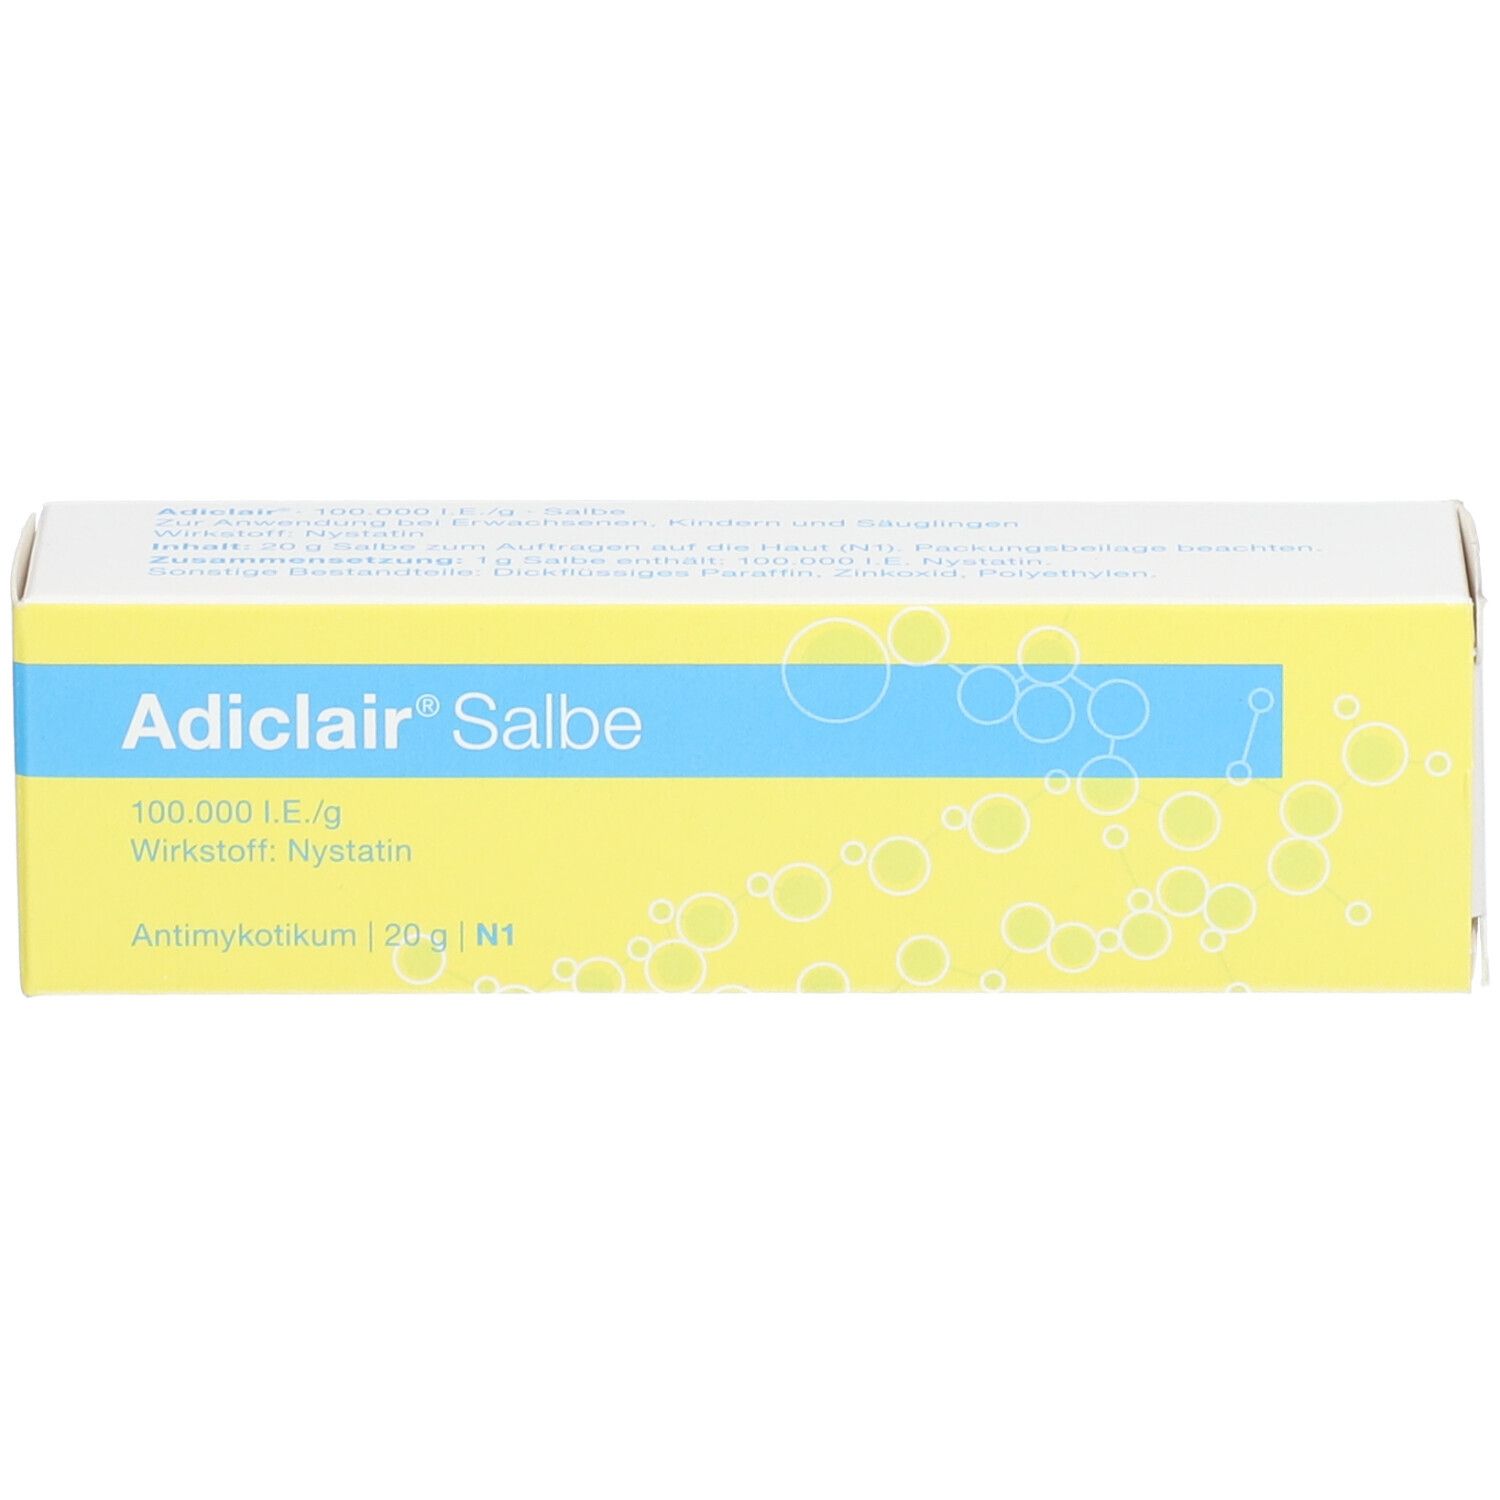 Adiclair® Salbe